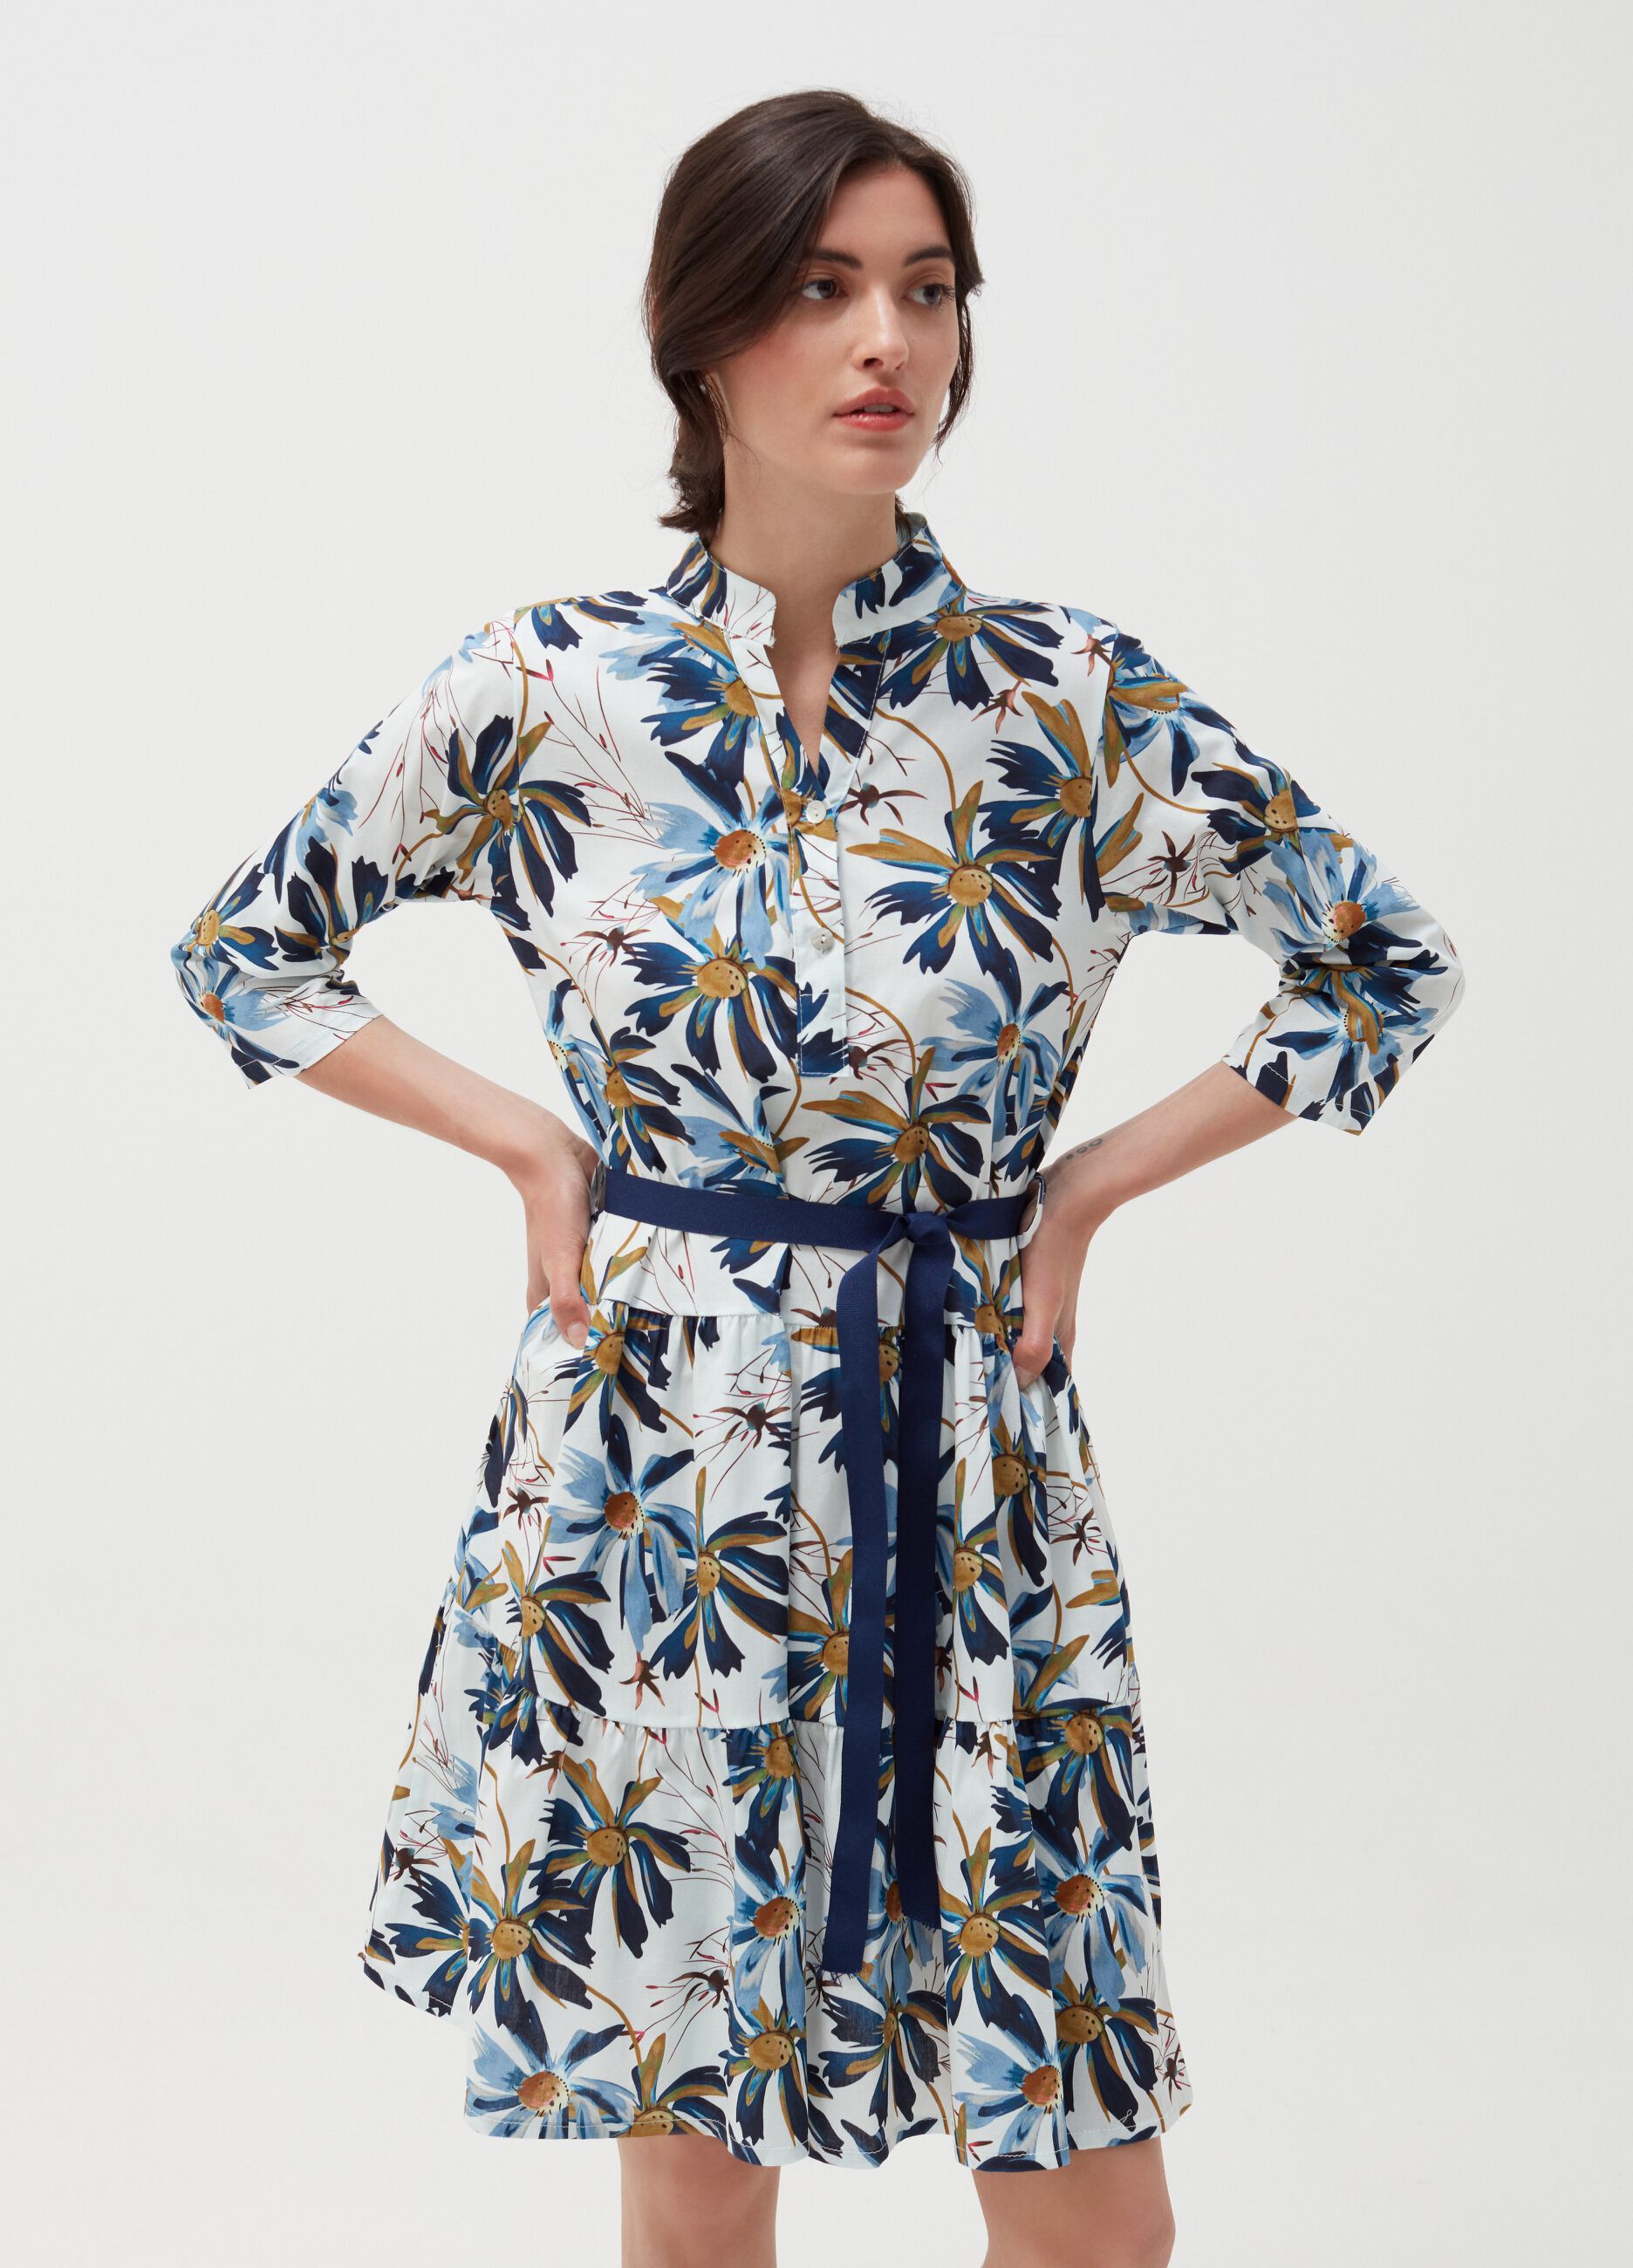 Hybrid floral shirt dress